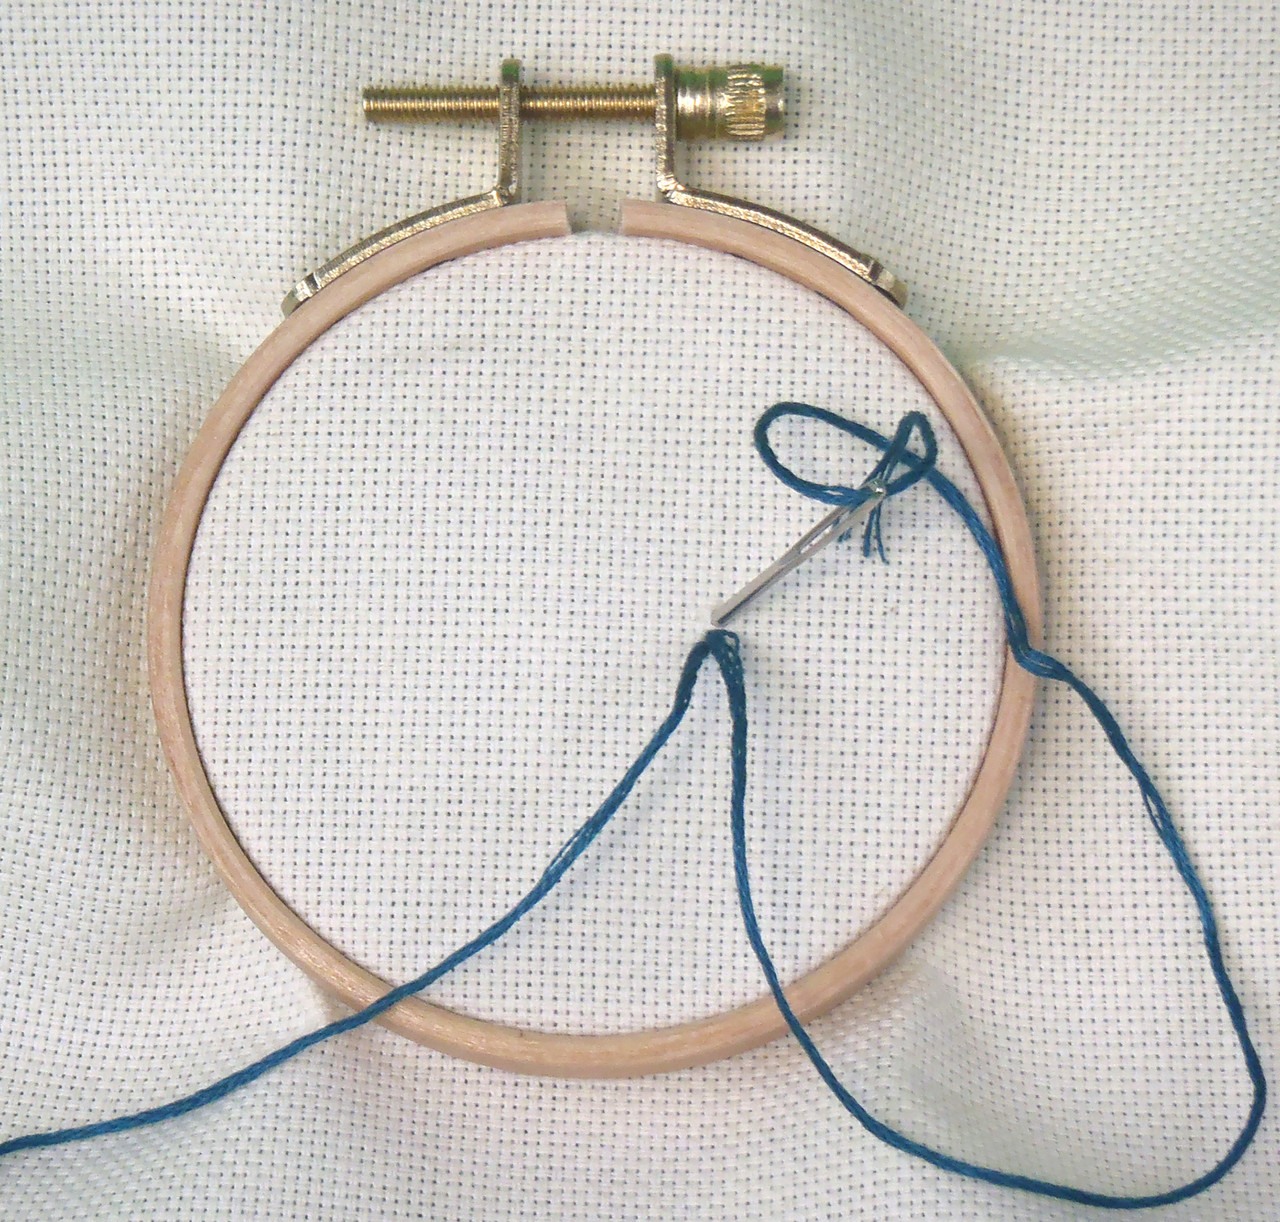 Frank A. Edmunds Beechwood Embroidery Hoop-12 